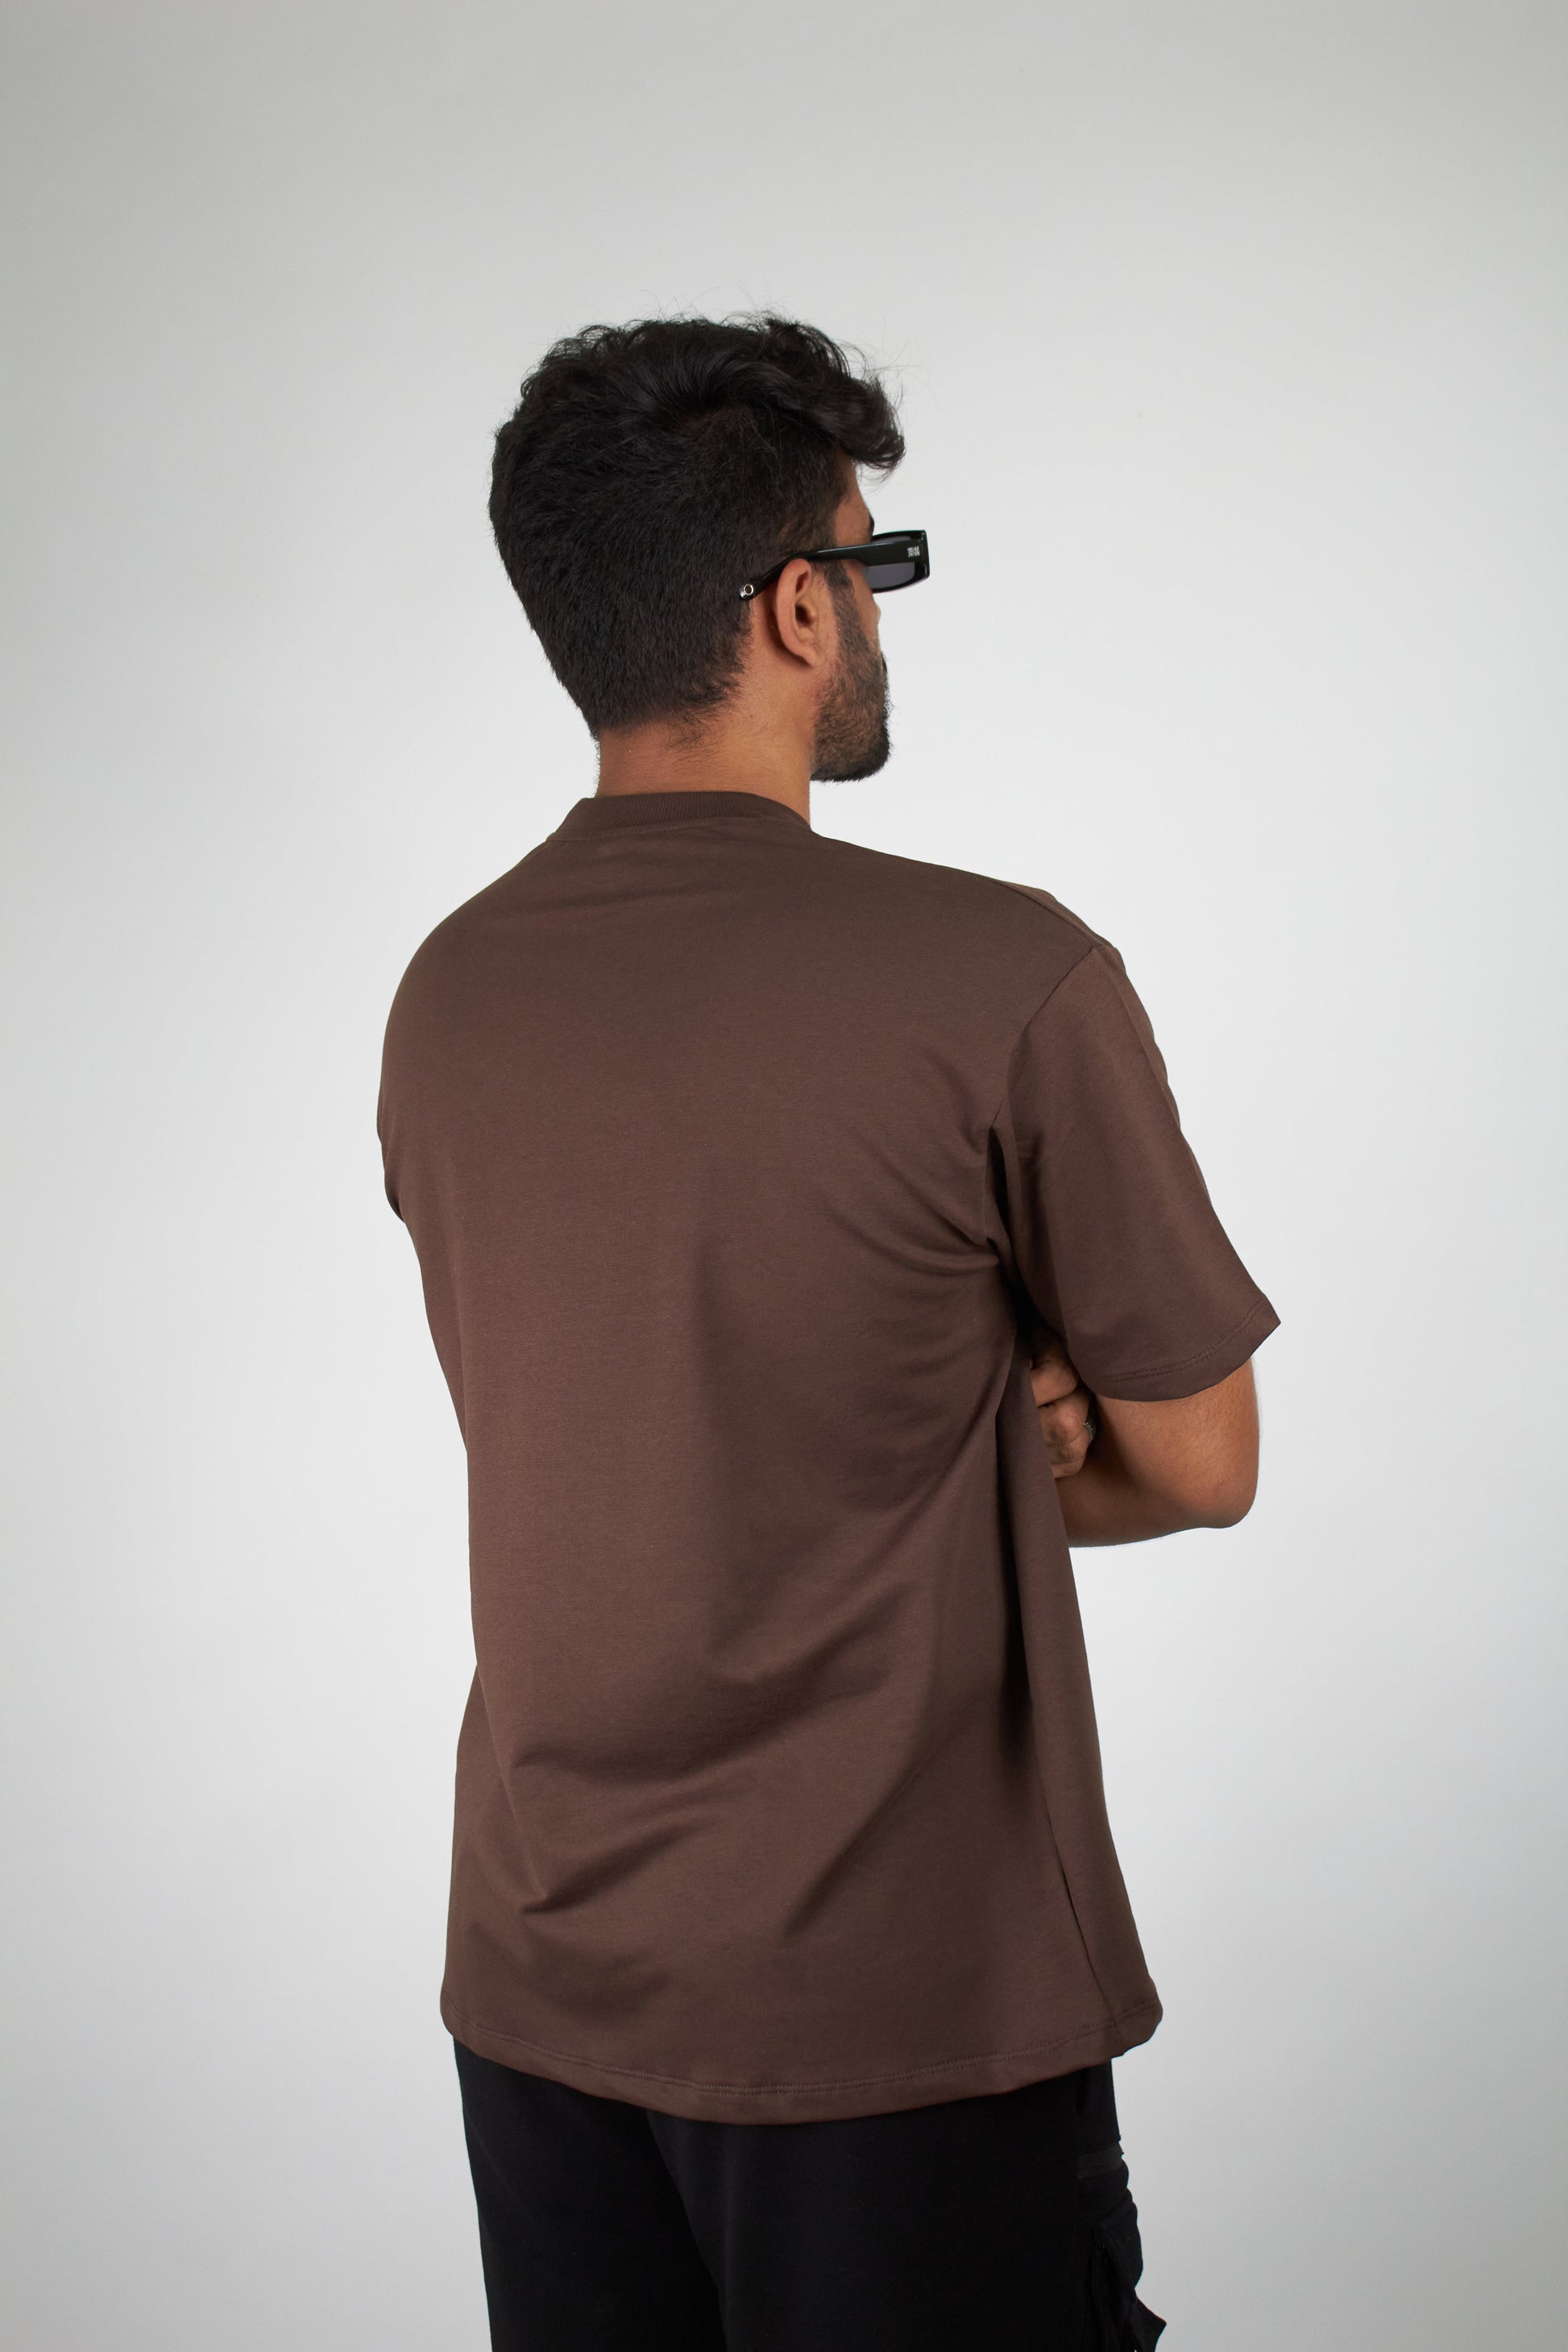 Mocha brown (Oversized Tshirts) by Ripoff